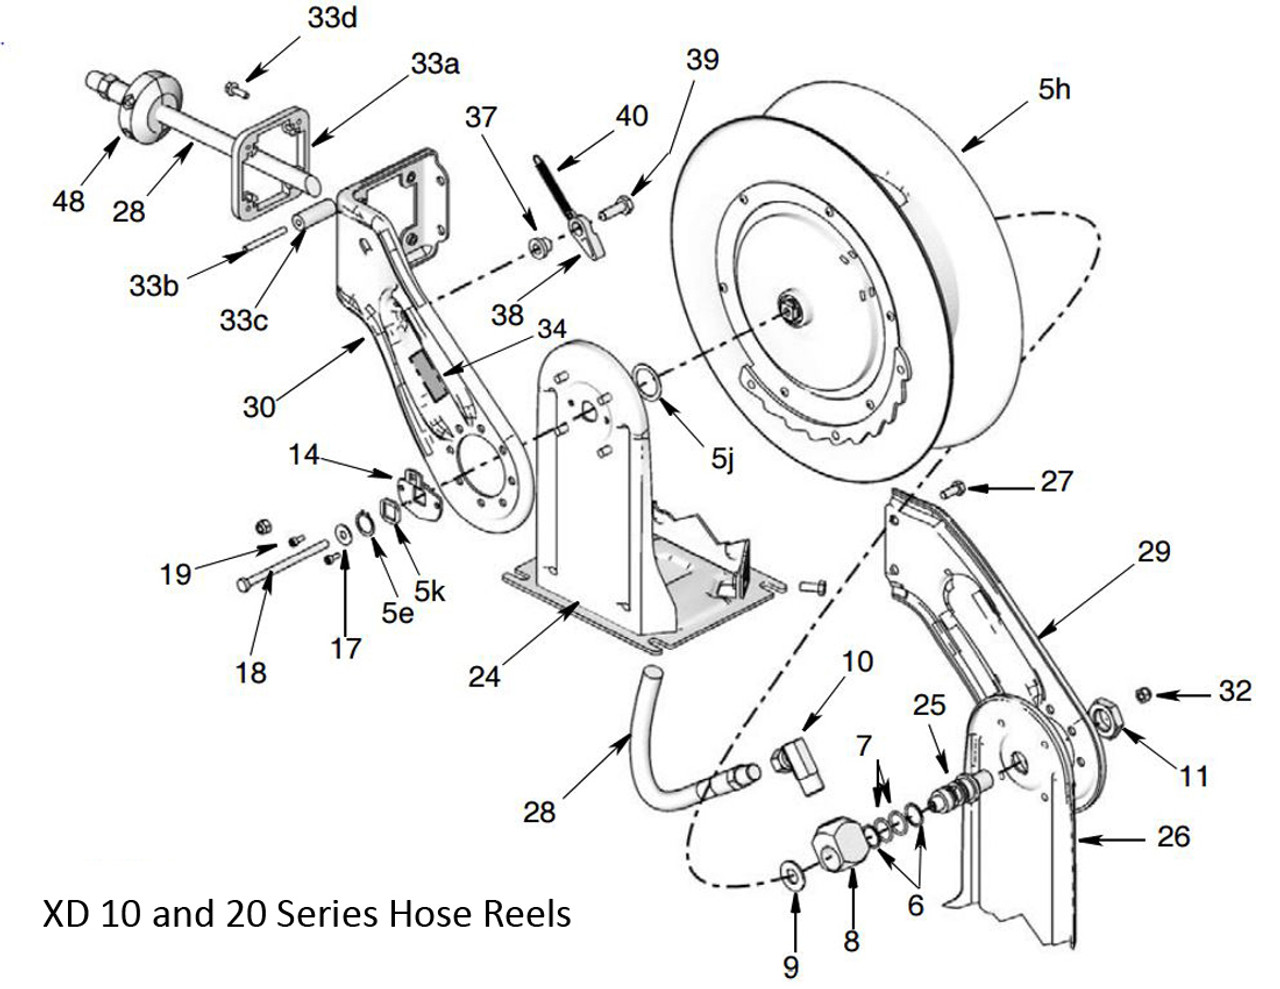 Graco XD 10 Air/Water Hose Reel Spool Repair Kit For HSL33B